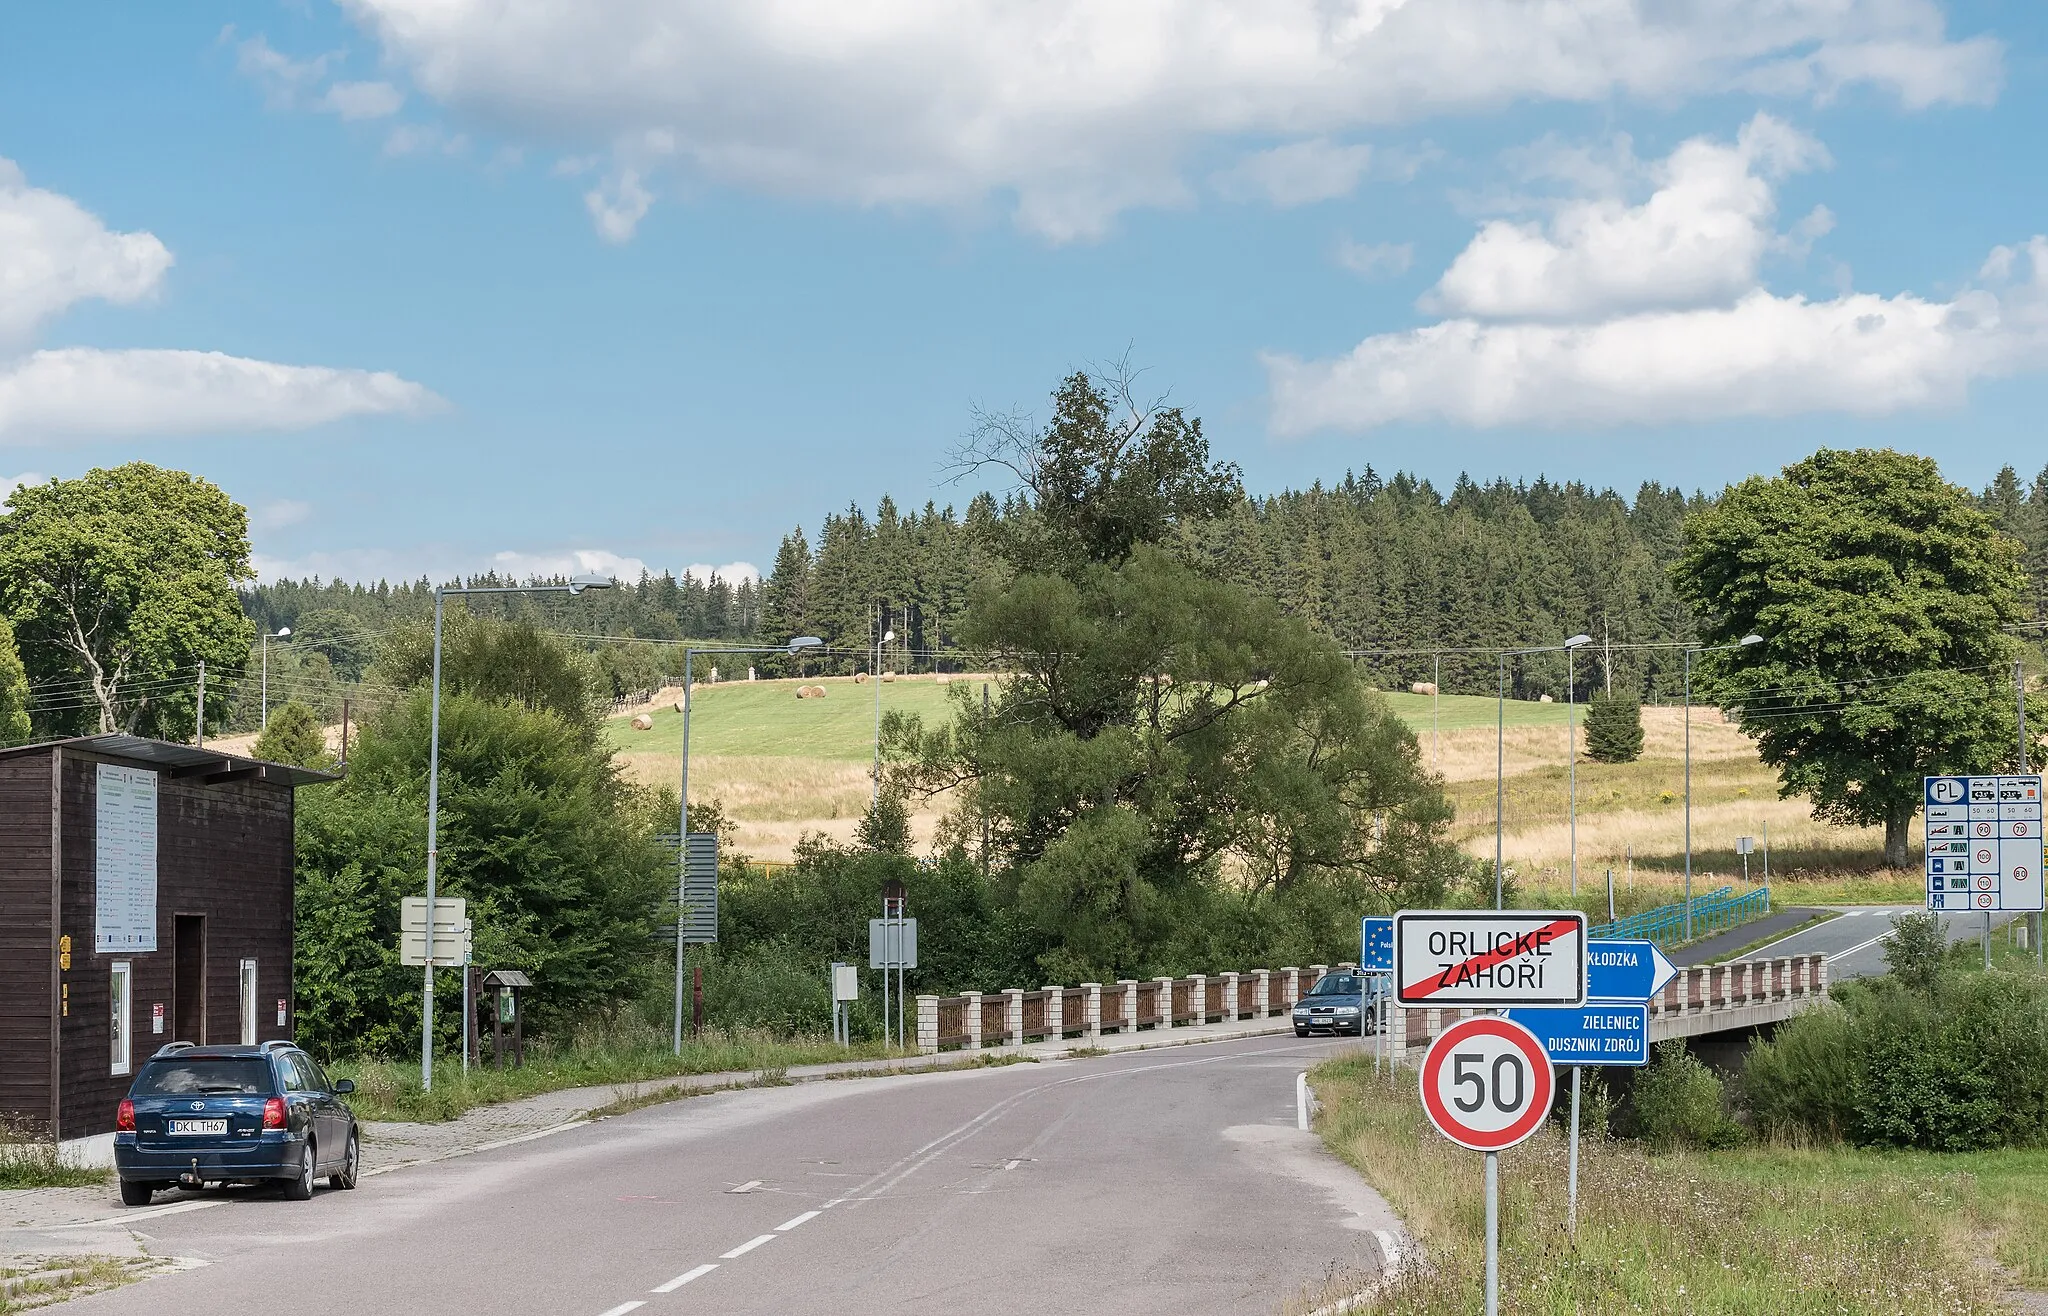 Photo showing: Border crossing between Mostowice, Poland and Orlické Záhoří, Czech Republic